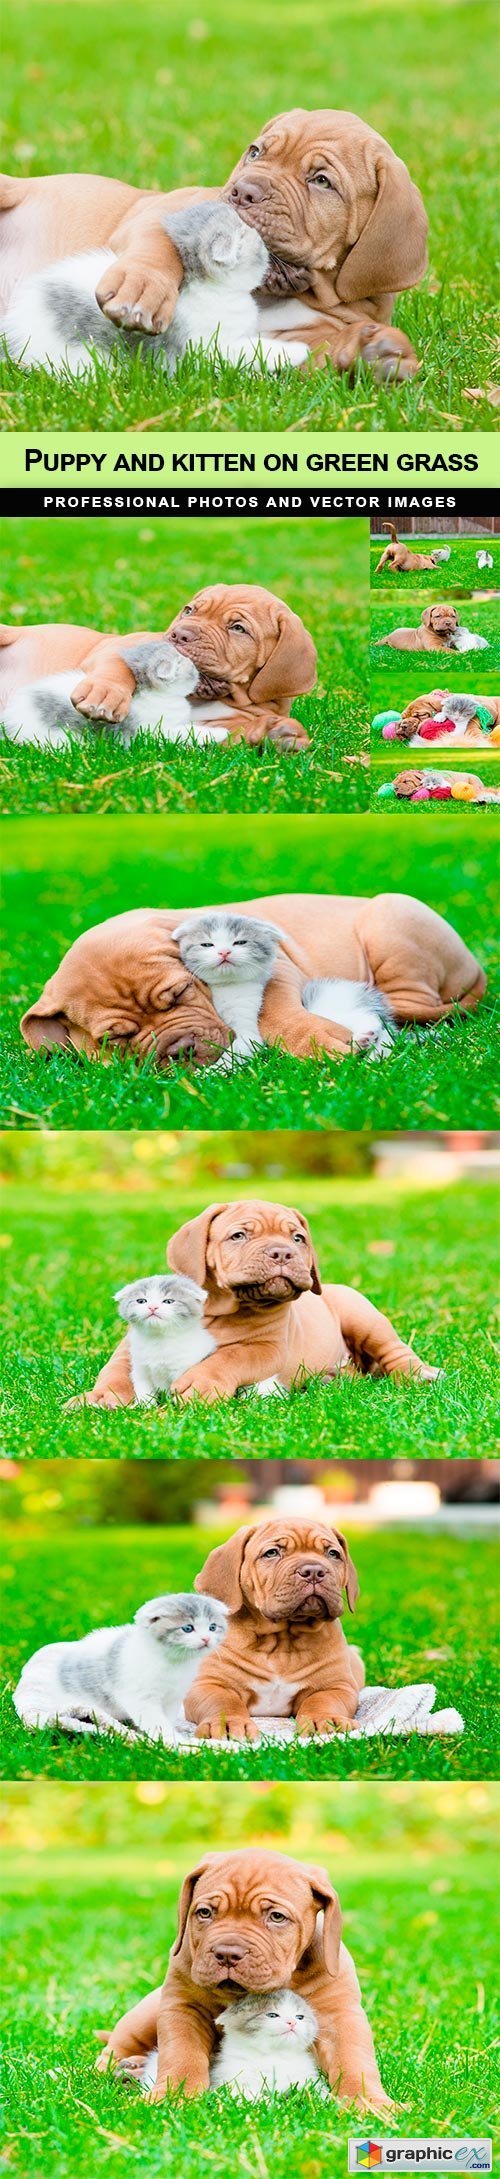 Puppy and kitten on green grass - 9 UHQ JPEG